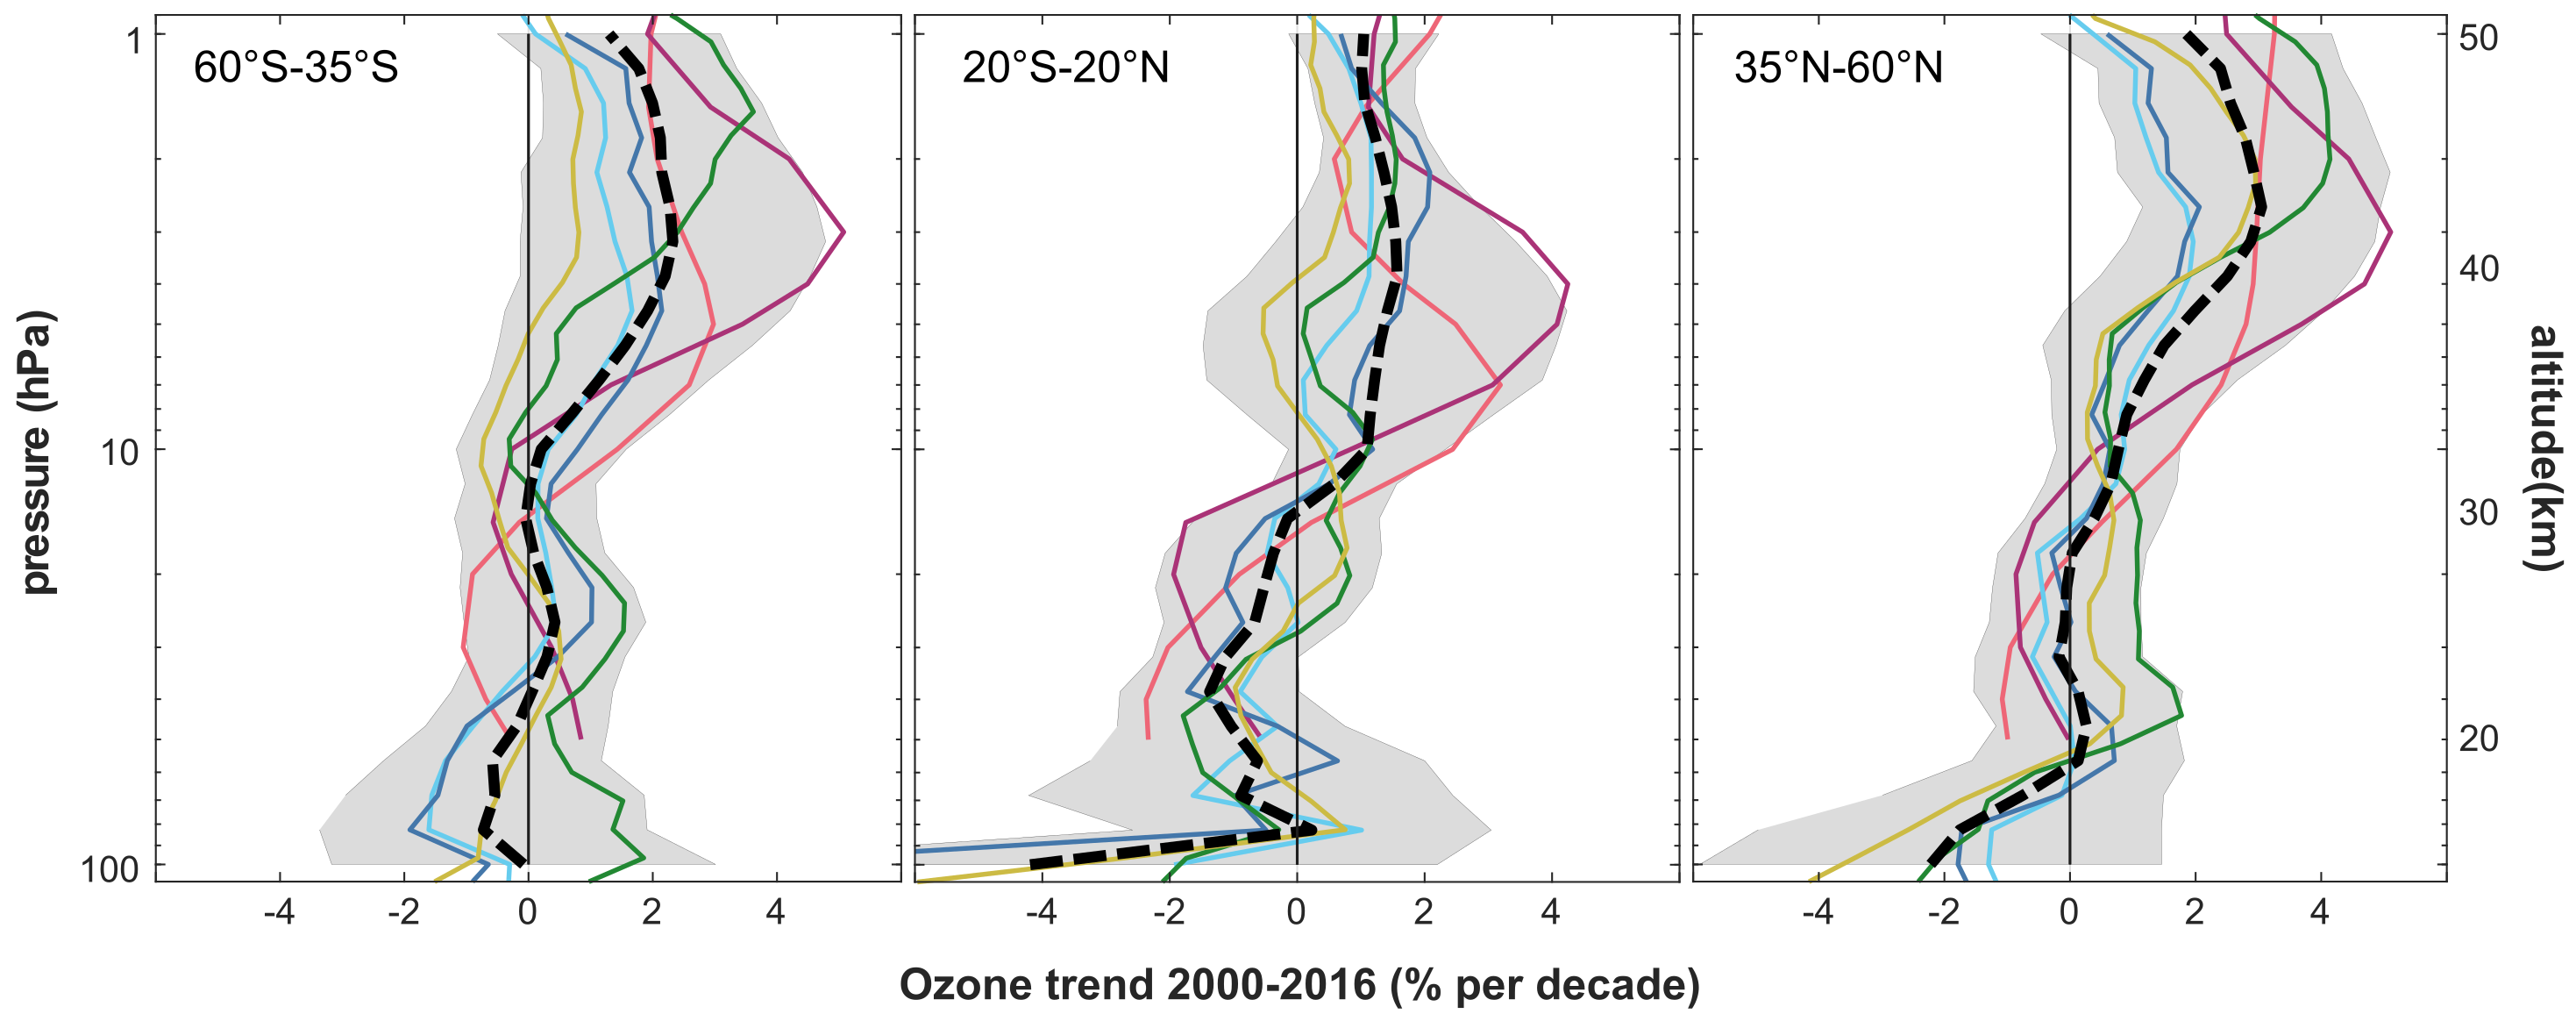 Satellite ozone trend profiles